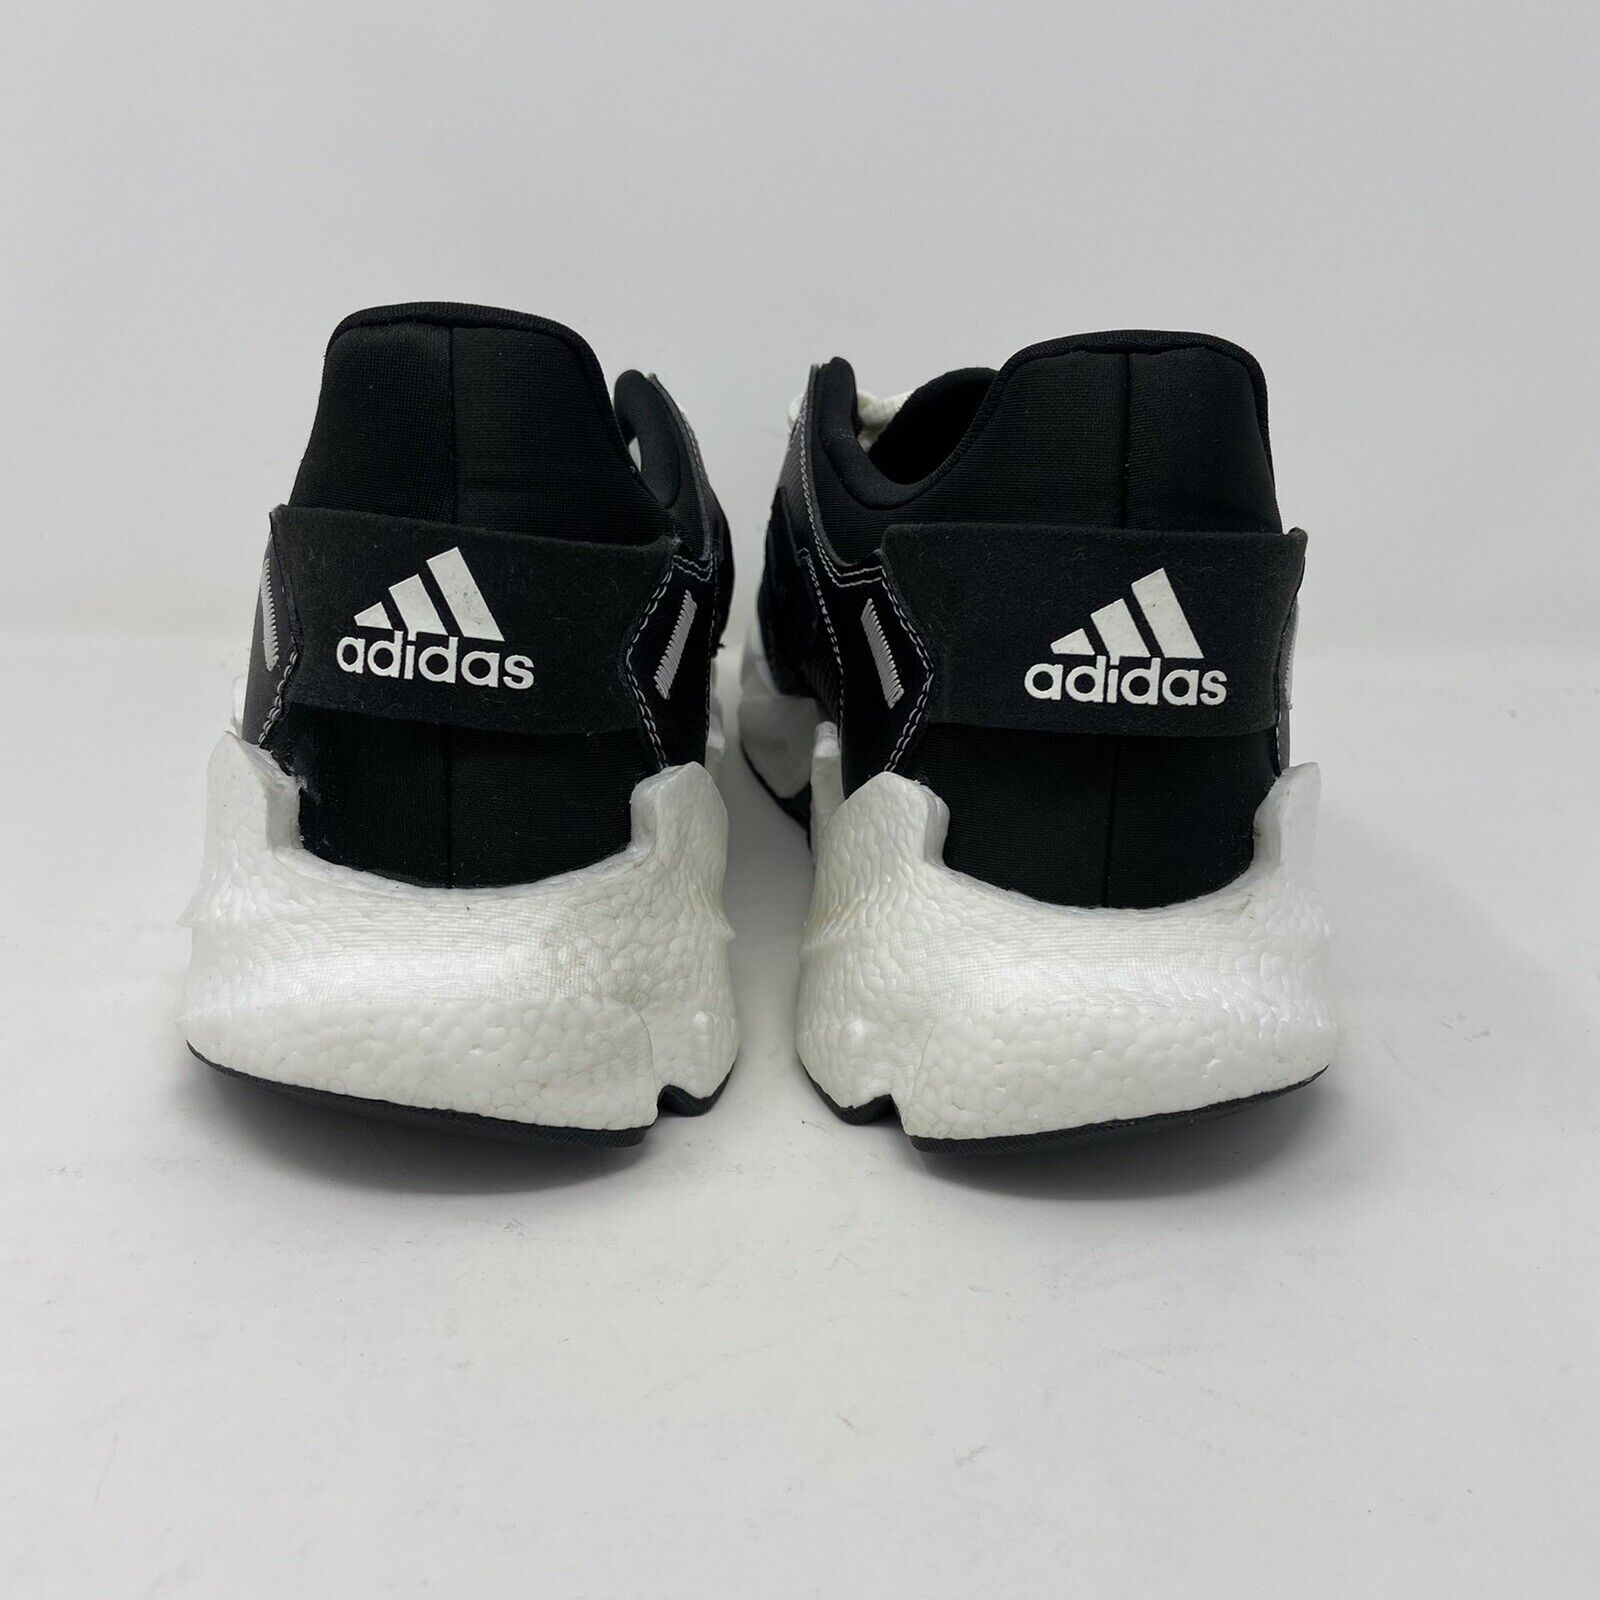 Adidas x Karlie Kloss X9000 S24029 Boost Running Shoes Black $140 ...